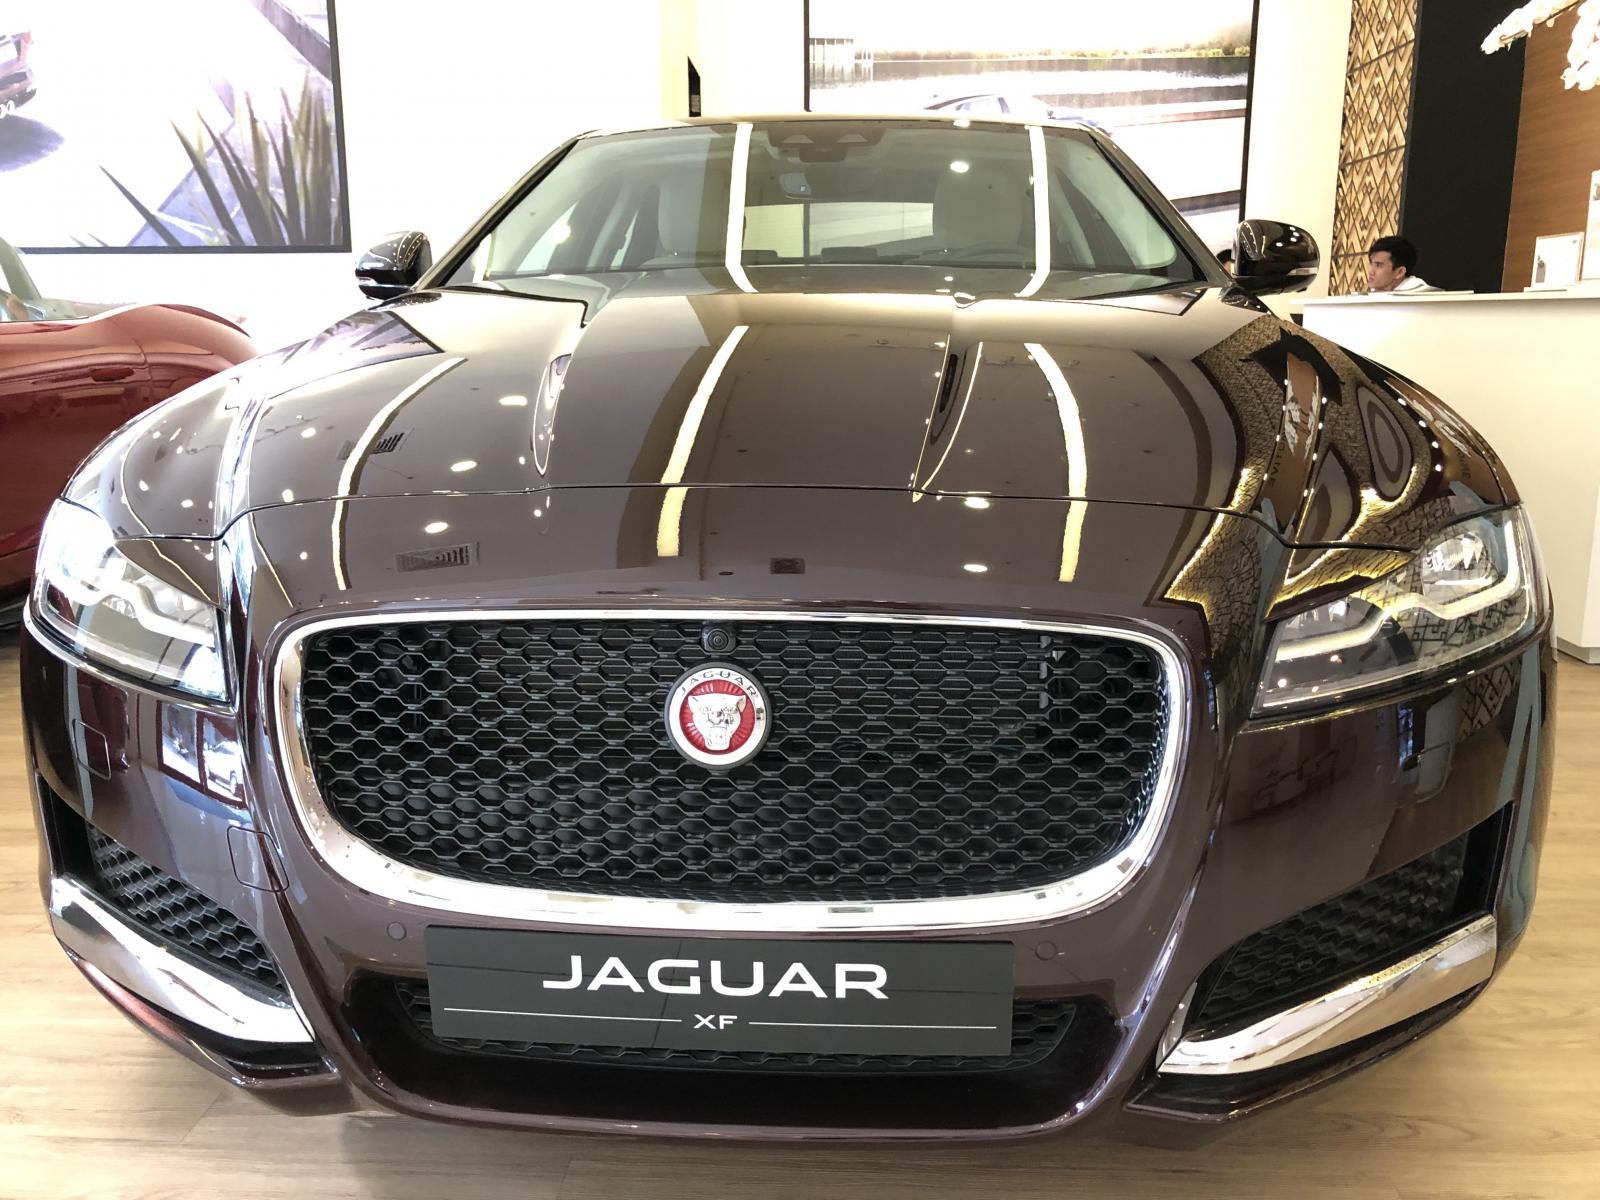 Bán xe Jaguar XF Prestige nhập mới giá tốt, giá xe Jaguar XF 2020 mới